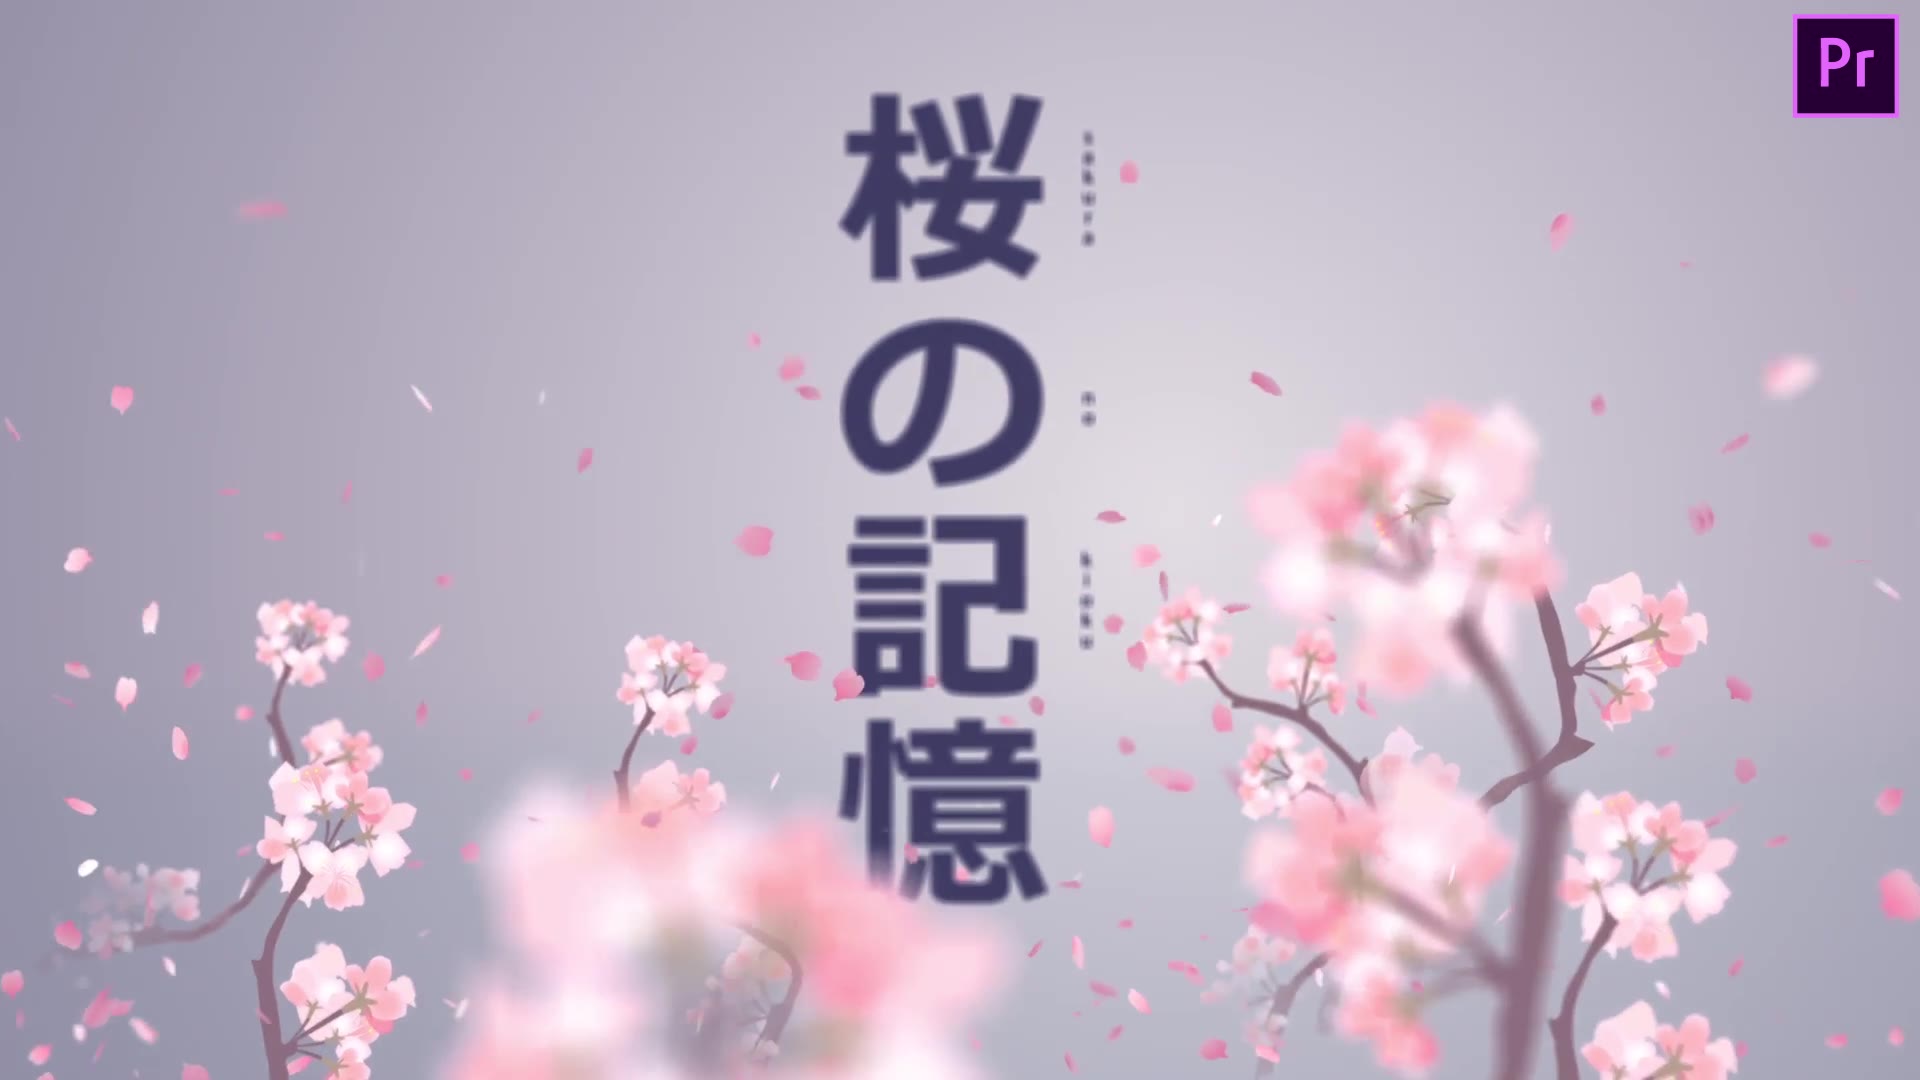 Japan Style Intro Romantic Titles Animation Promo Premiere Pro Videohive 34096420 Premiere Pro Image 3